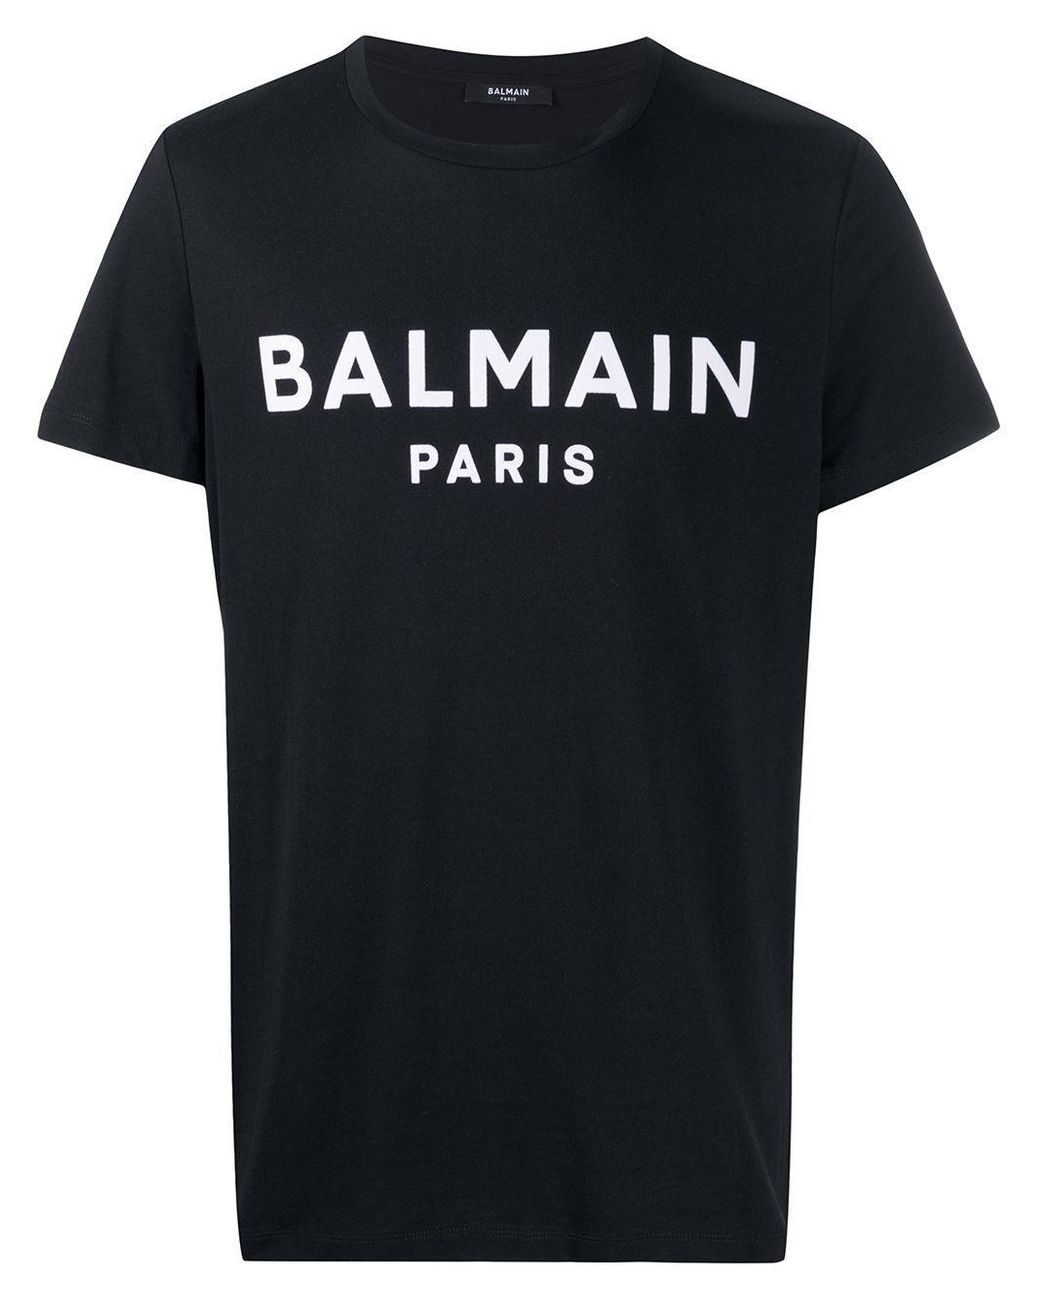 Balmain Cotton T-shirt in Black for Men - Lyst